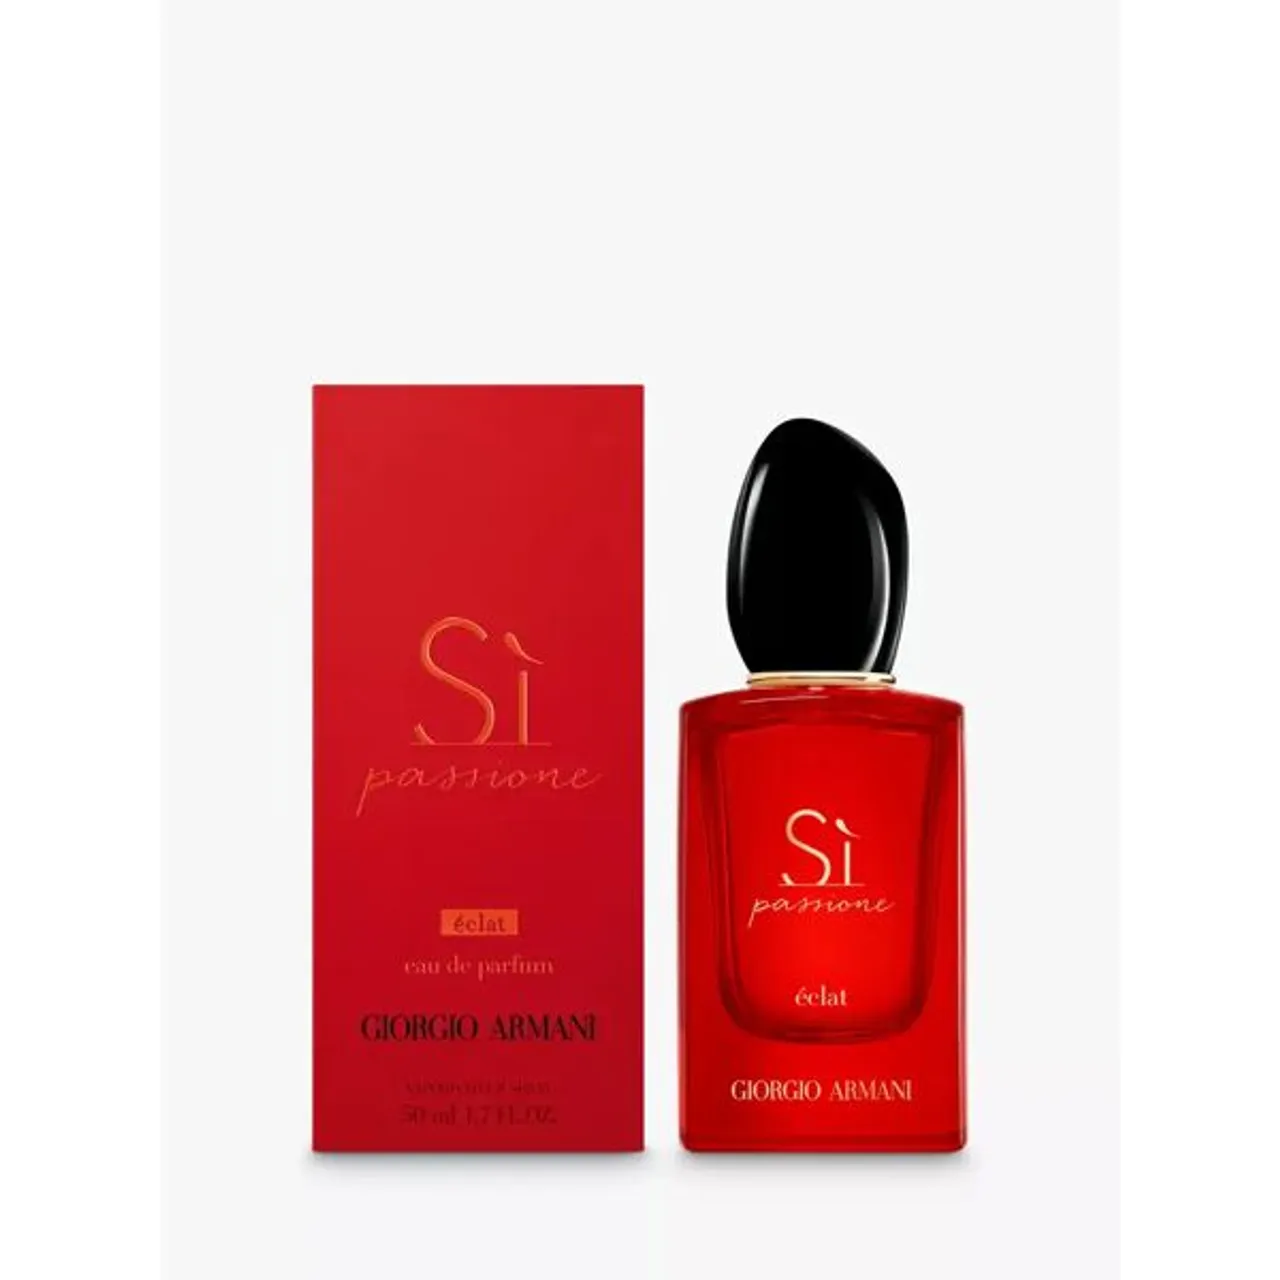 Giorgio Armani Passione Eclat Eau de Parfum - Female - Size: 50ml